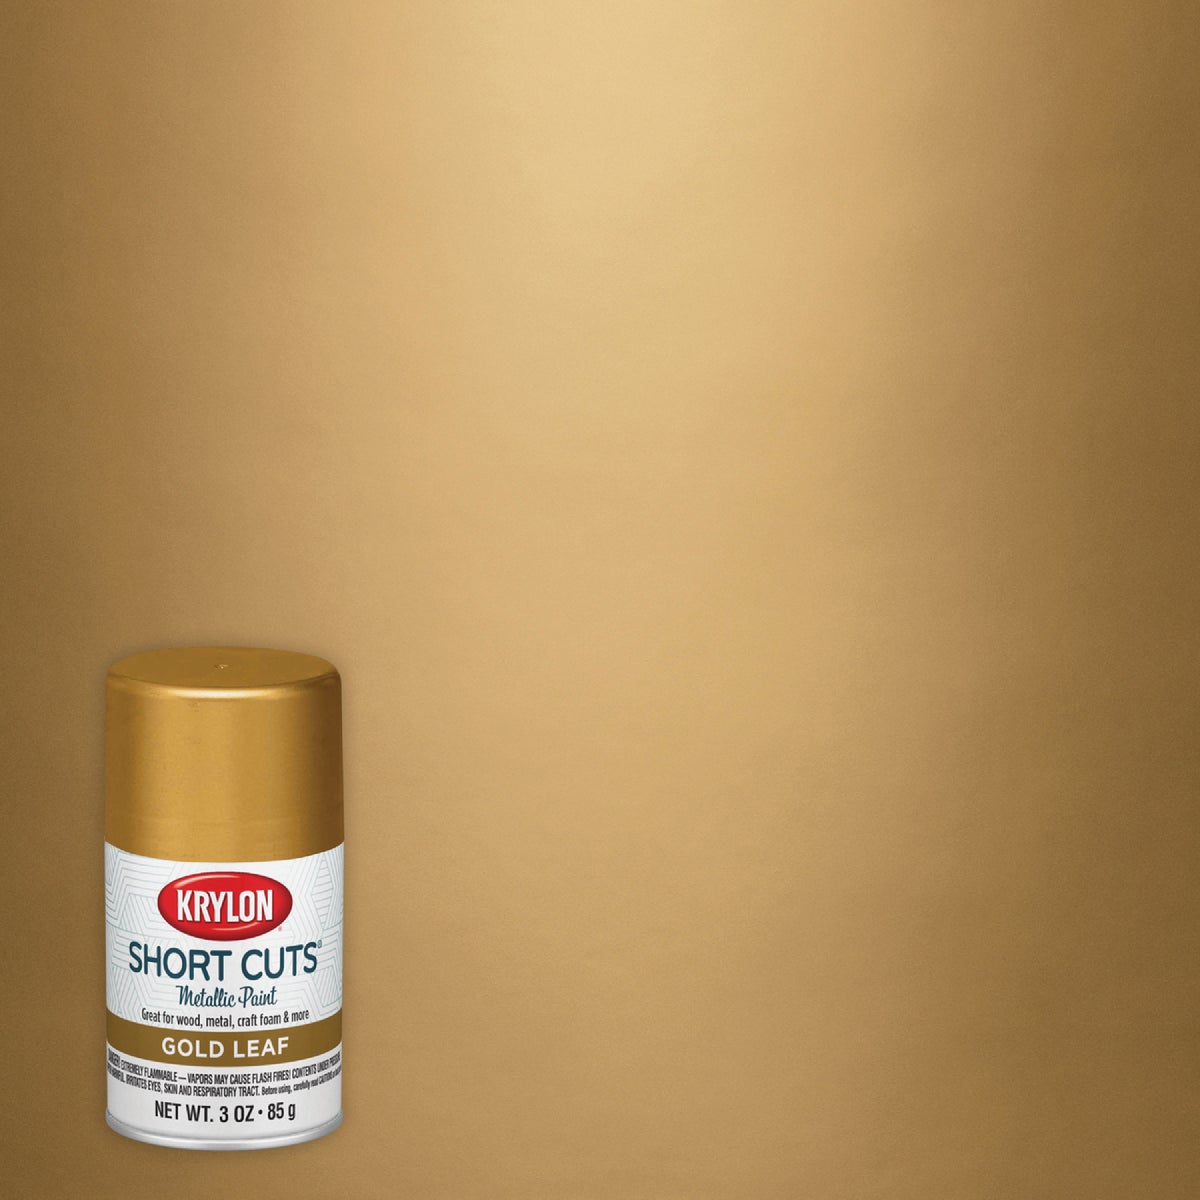 Krylon Short Cuts 3 Oz. High-Gloss Enamel Metallic Spray Paint, Gold Leaf